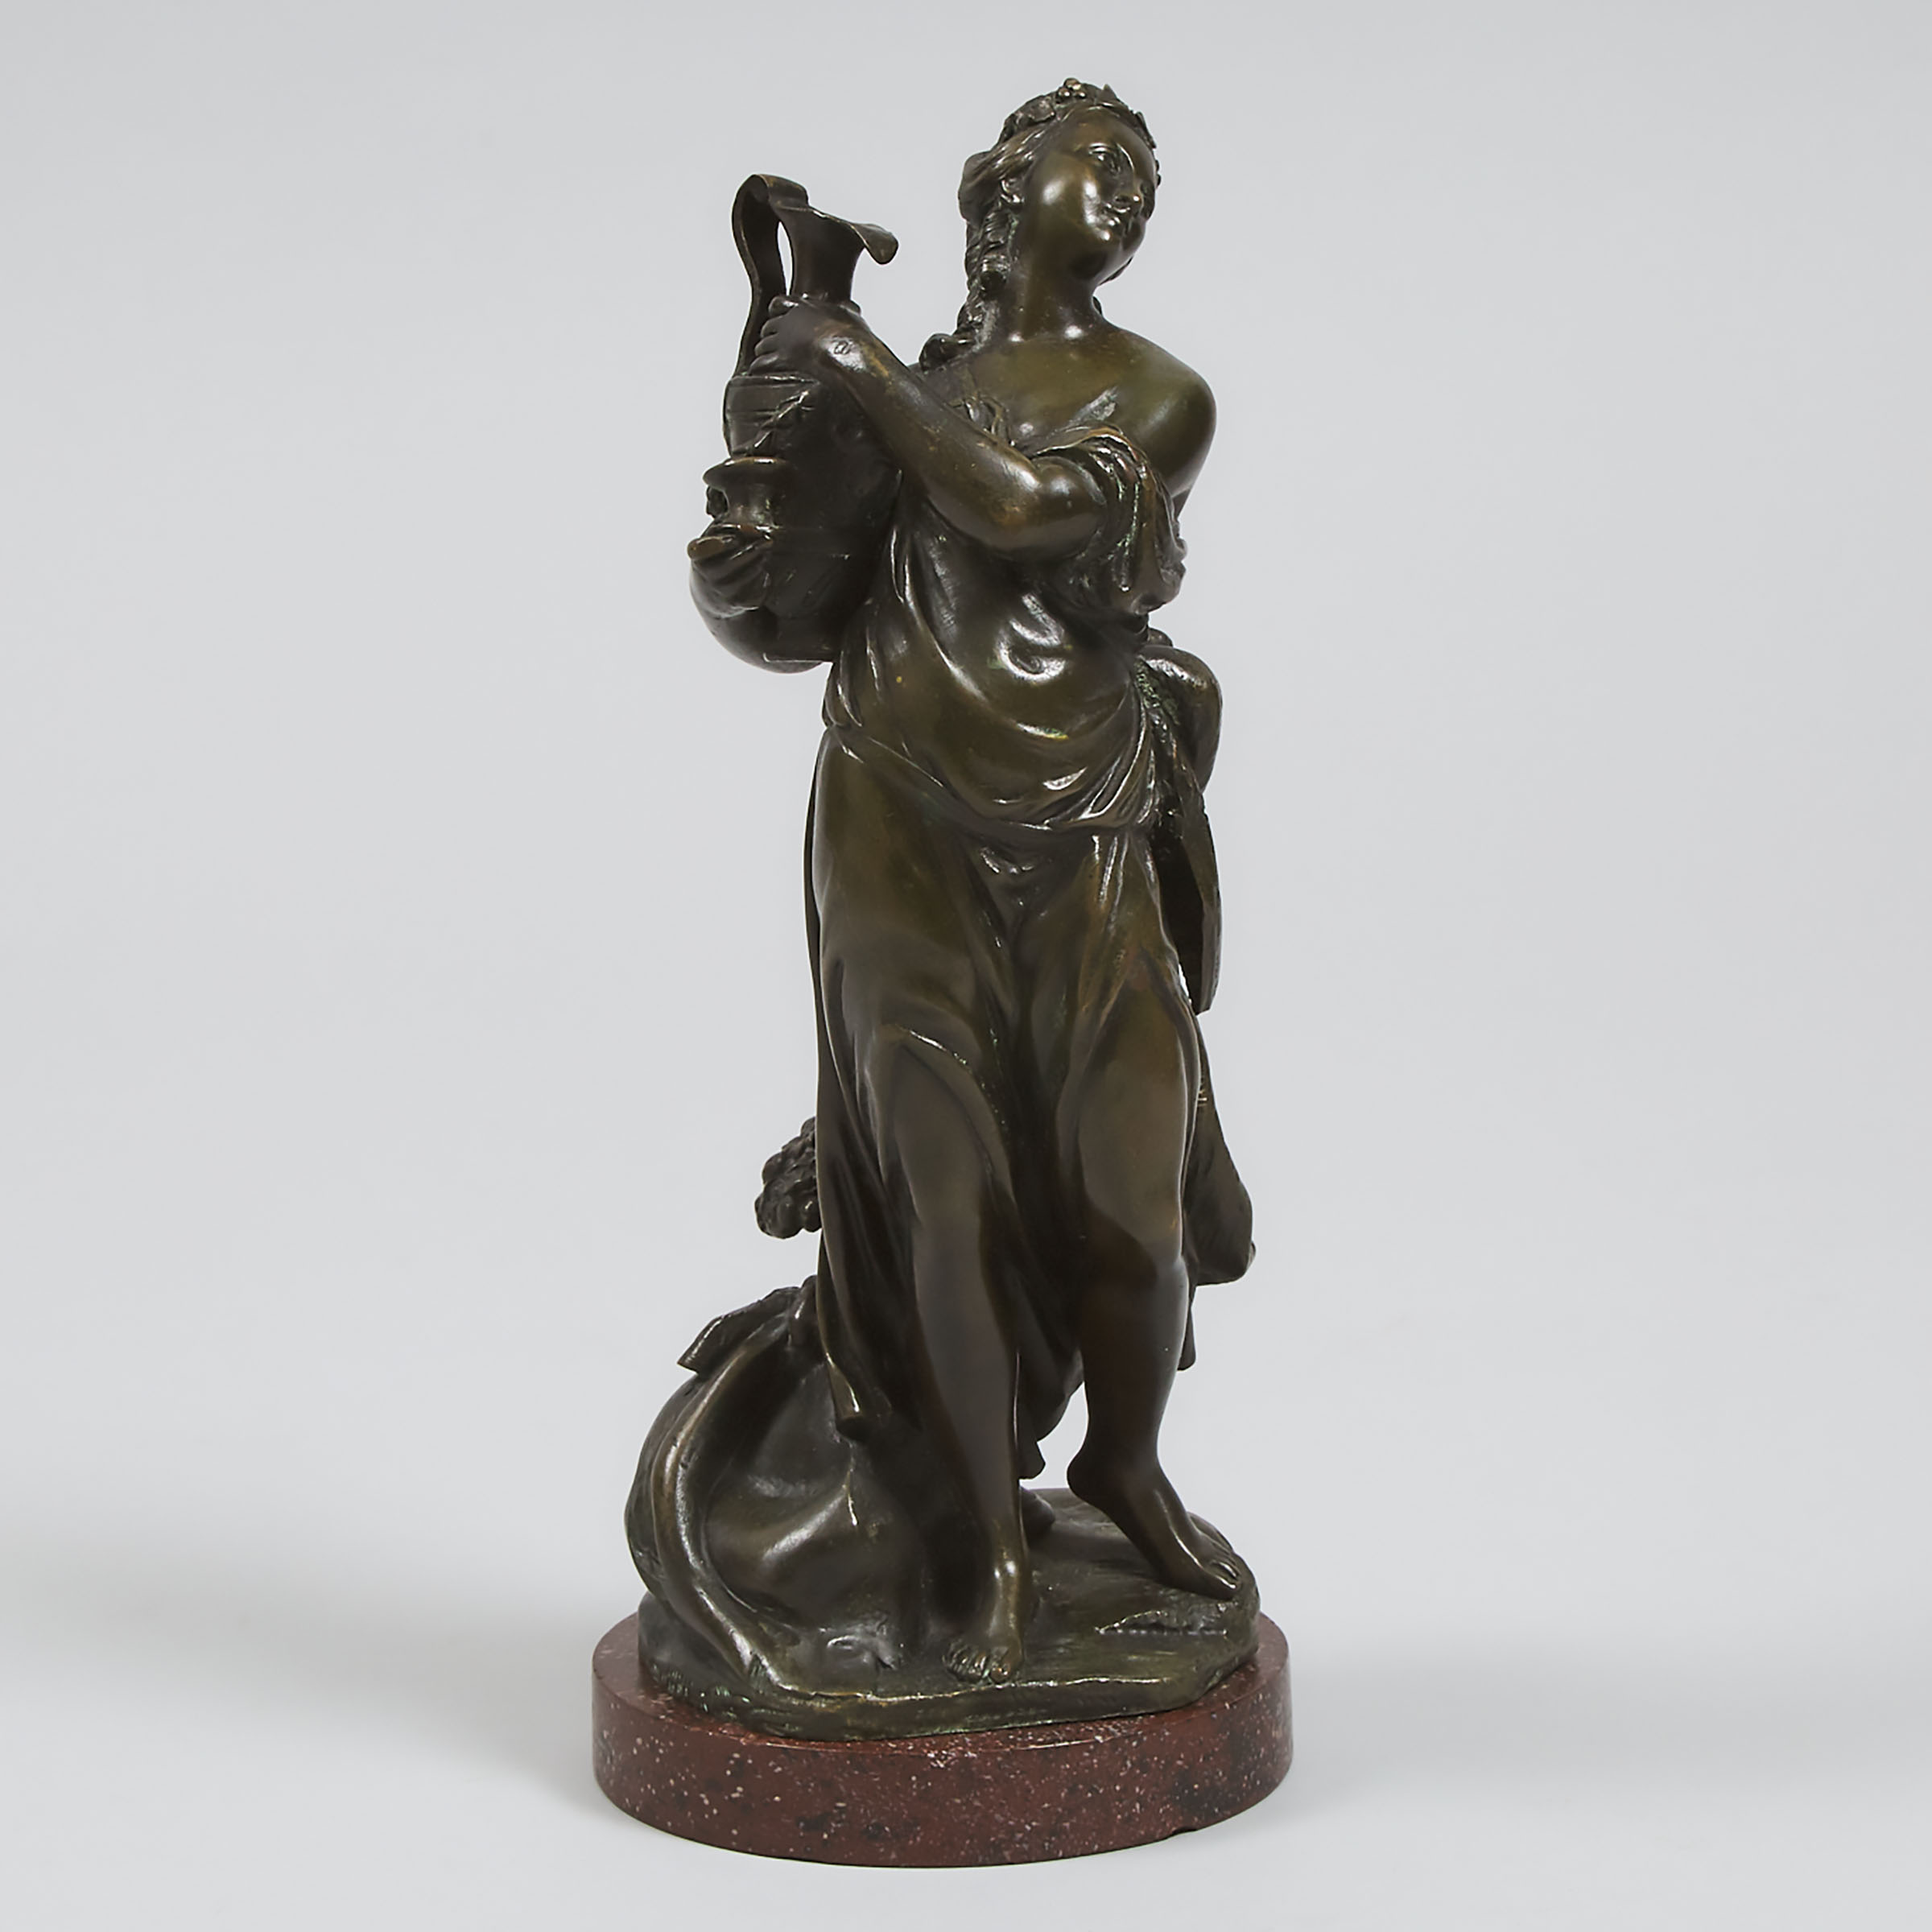 Italian Patinated Bronze Allegorical Figure of Spring, 19th century